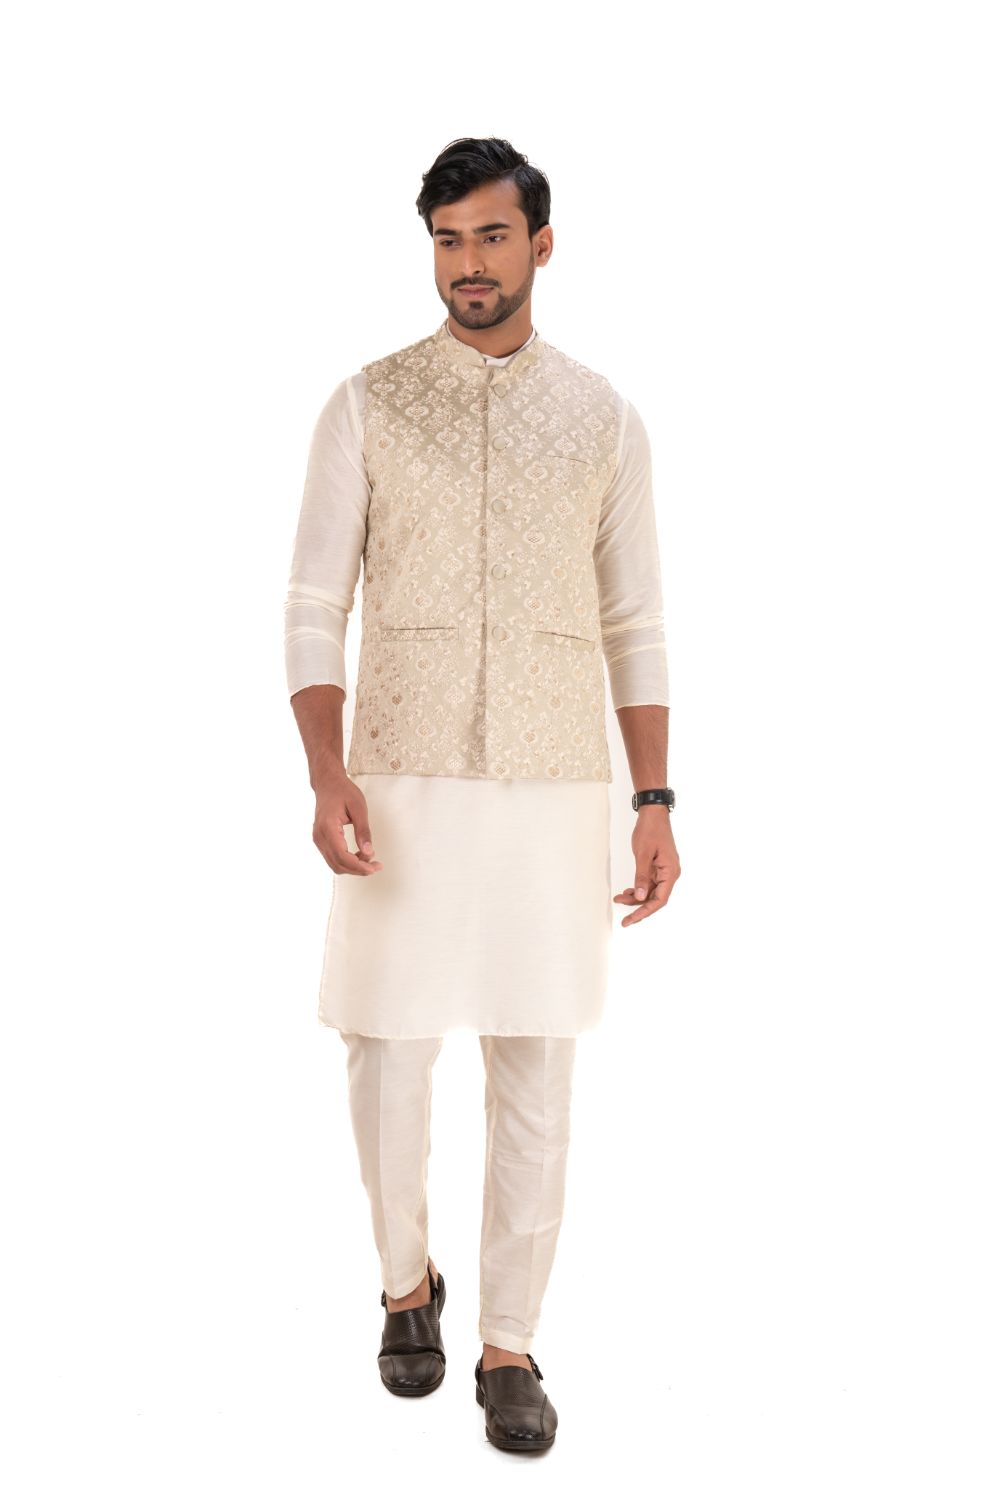 Bright White Multi Color Floral Textured Premium Polyester Designer Nehru  Jacket For Men